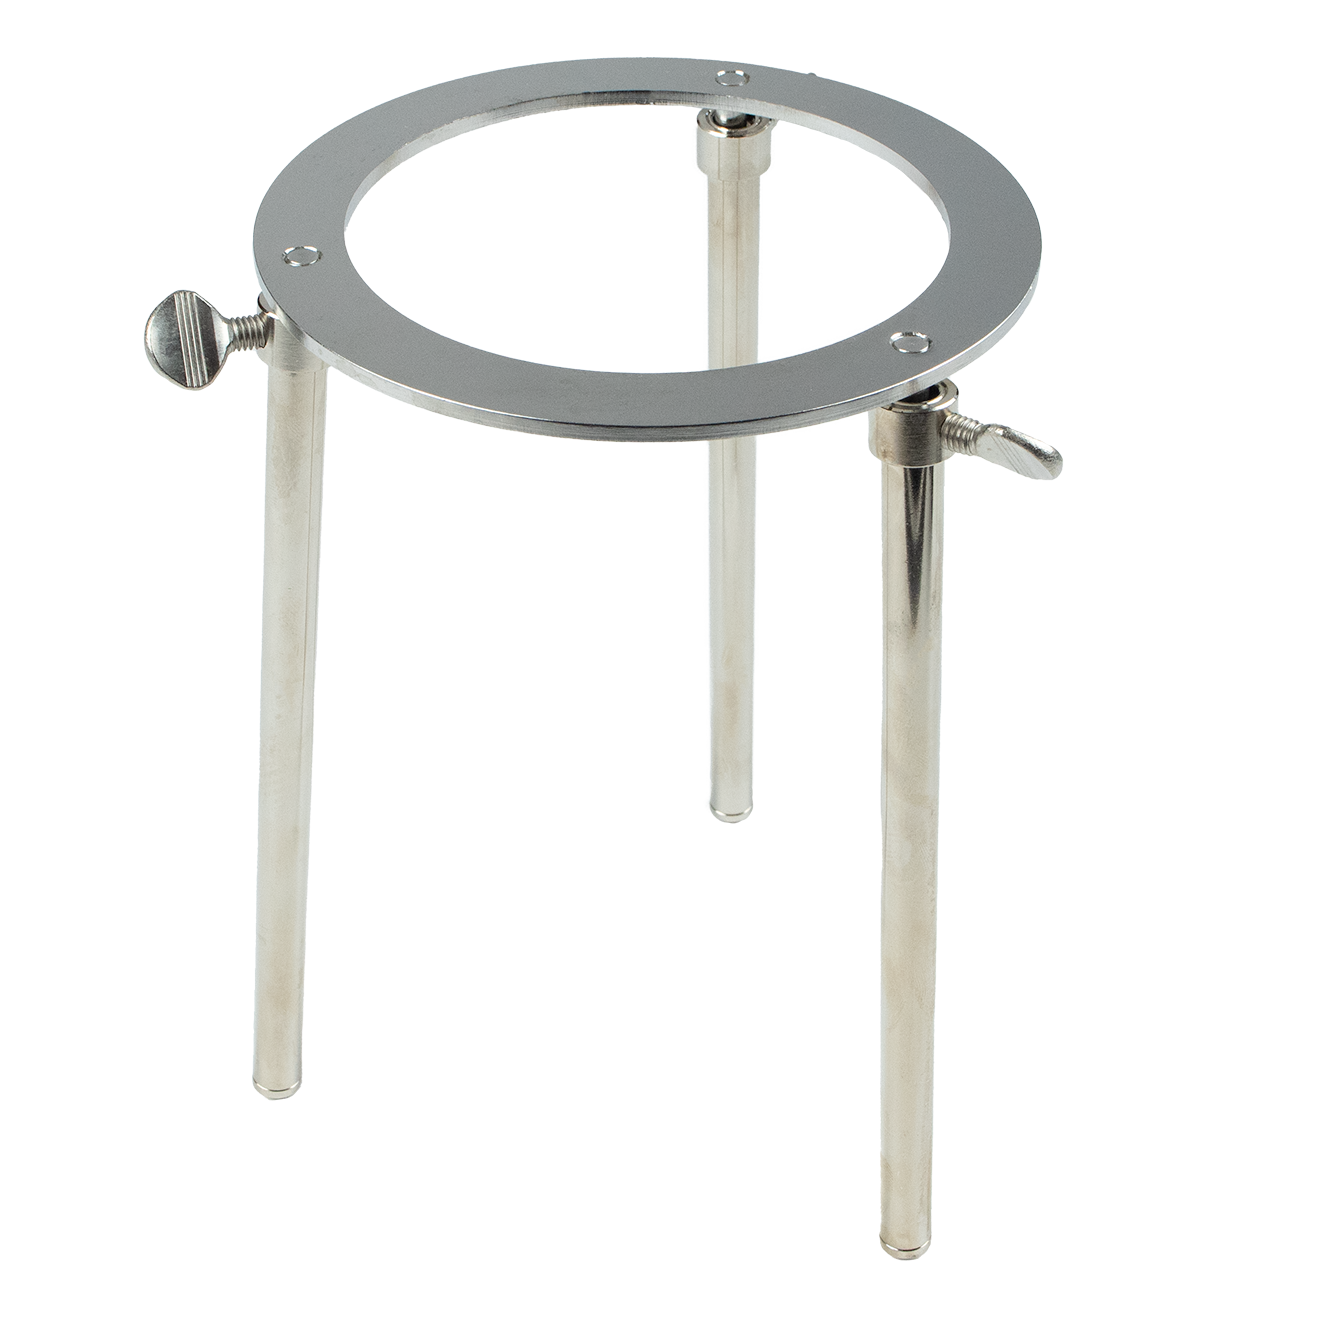 Tripod Height Adjustable - inner diameter 100 mm - stainless steel